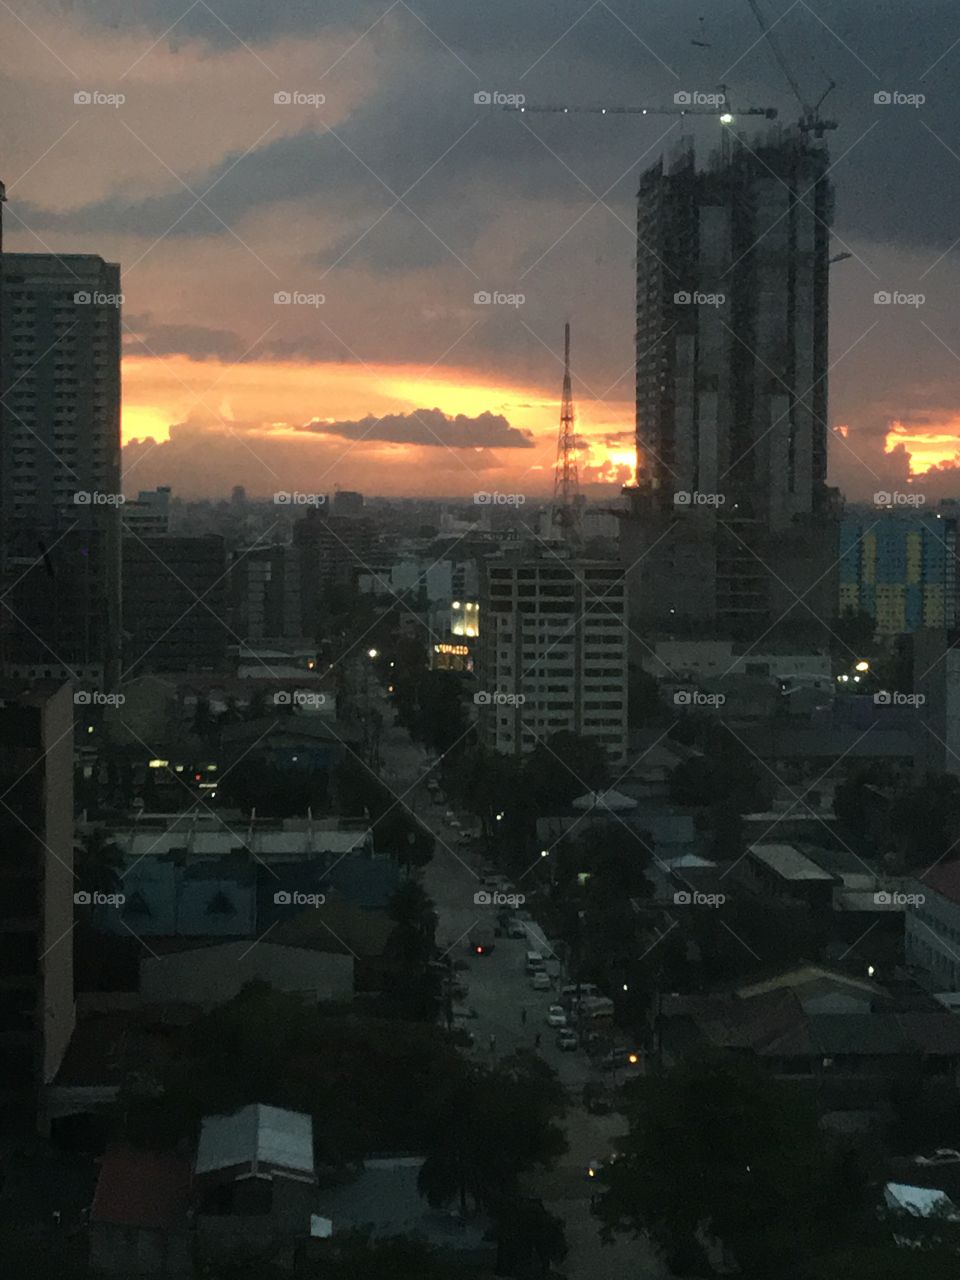 Manila, Philippines. Taken with iPhone 6s Plus. 